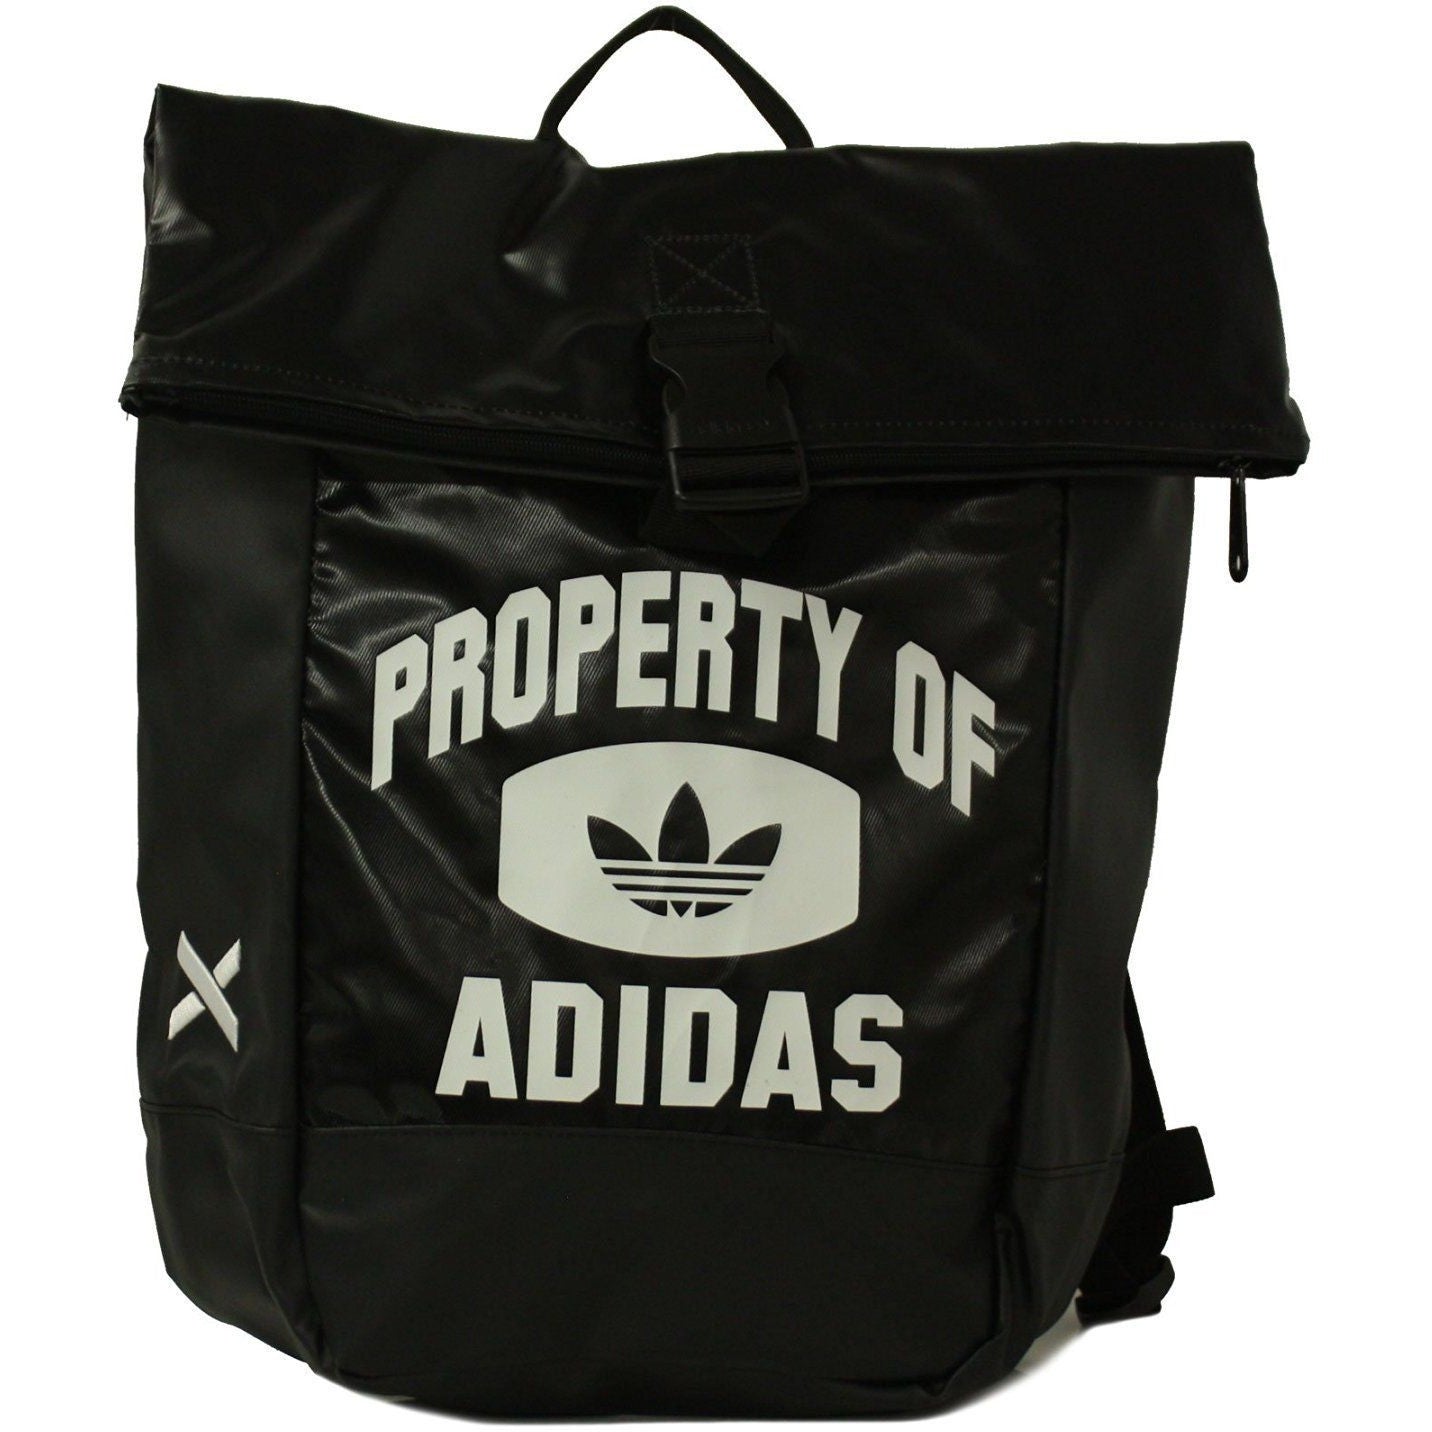 adidas boxing backpack